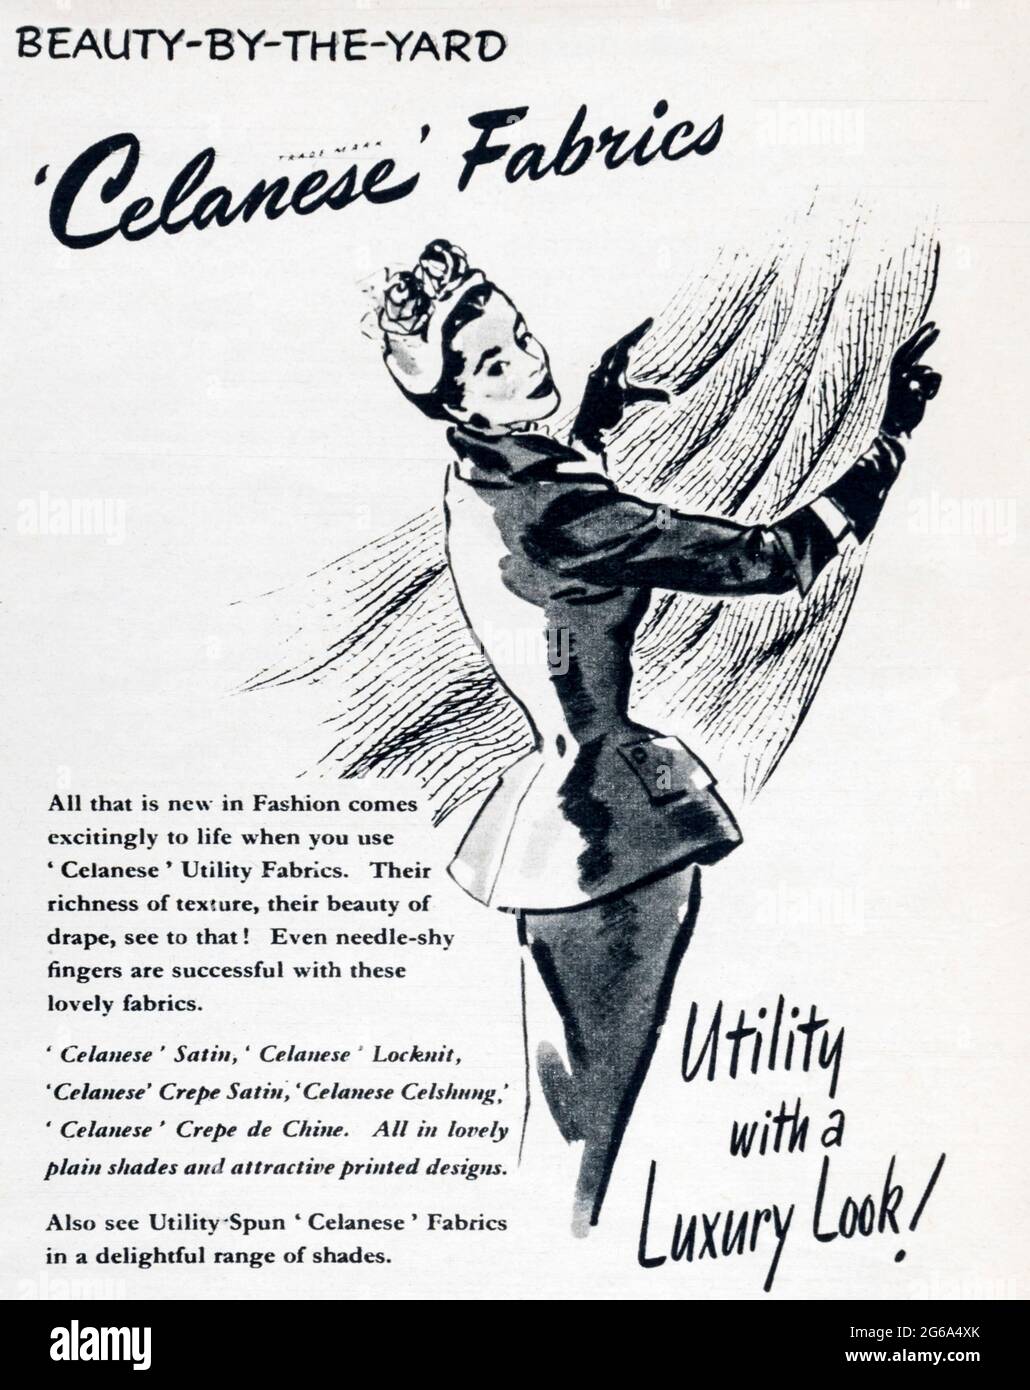 A 1950s magazine advertisement for Celanese Fabrics. Stock Photo